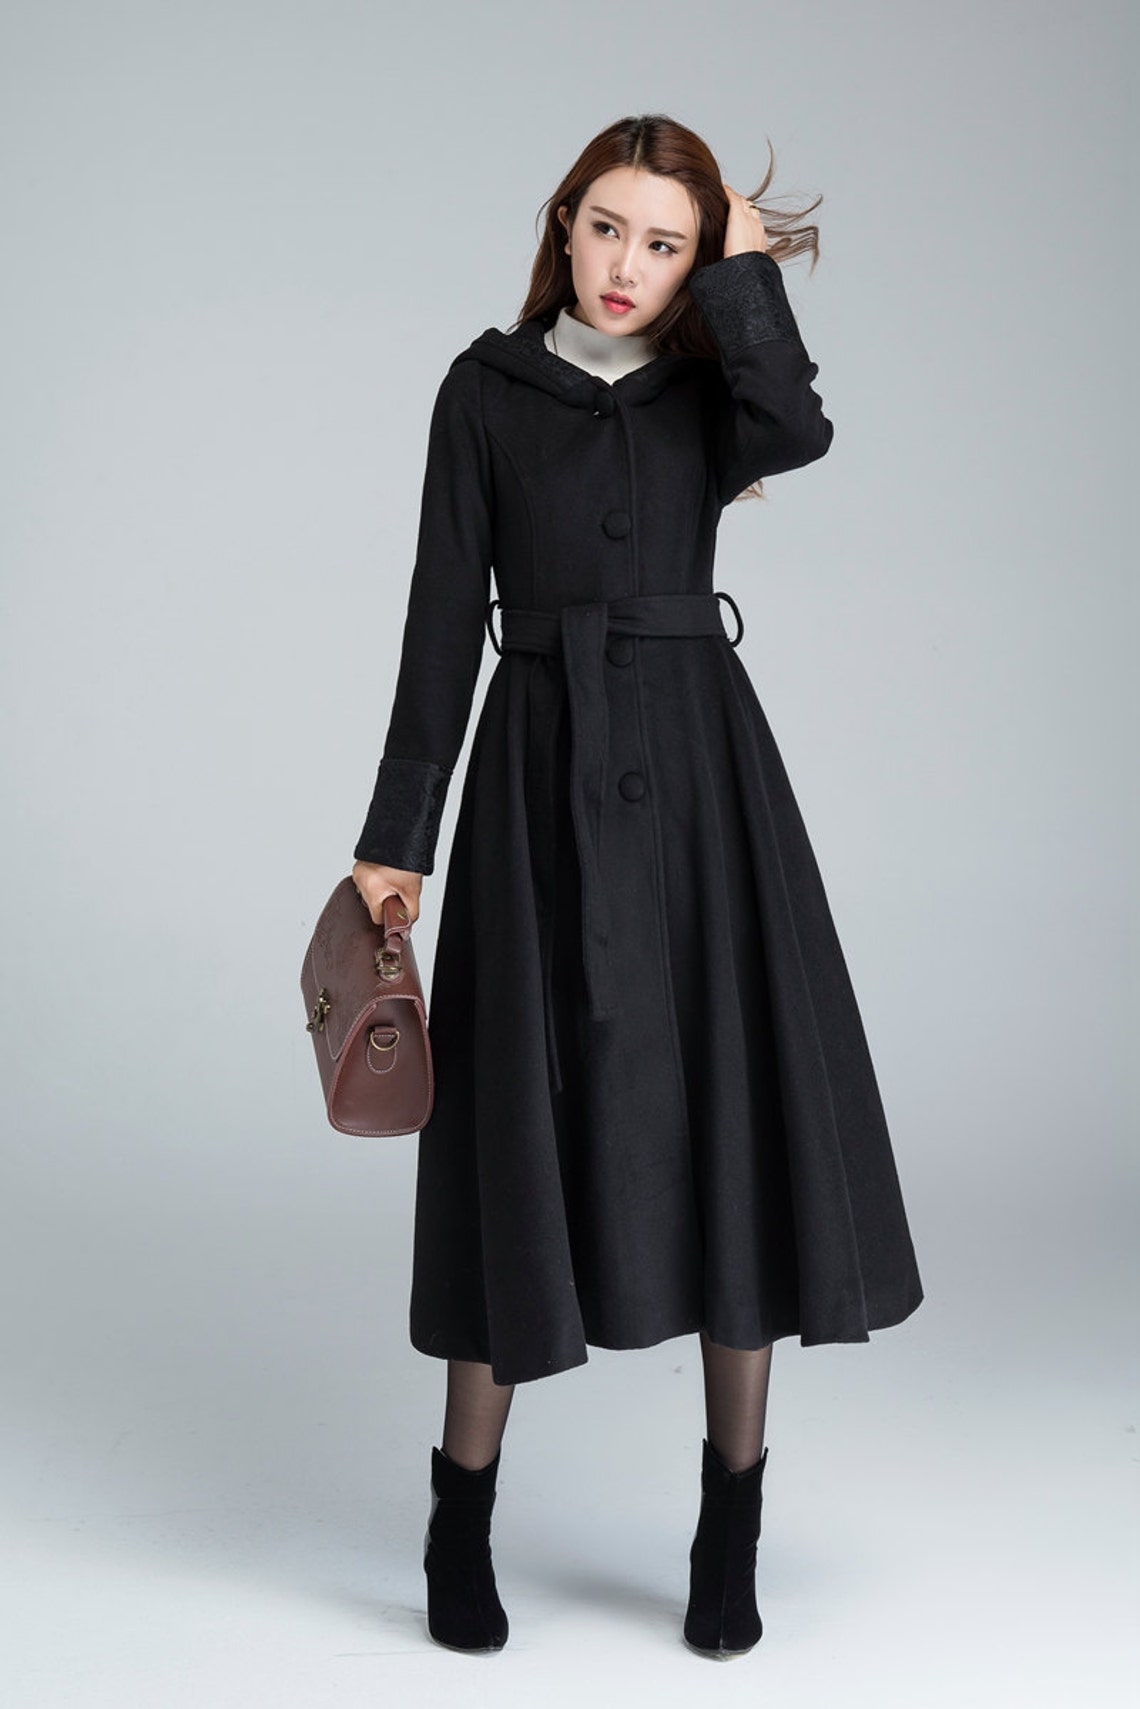 Black wool coat long trench coat hooded coat wool coat | Etsy